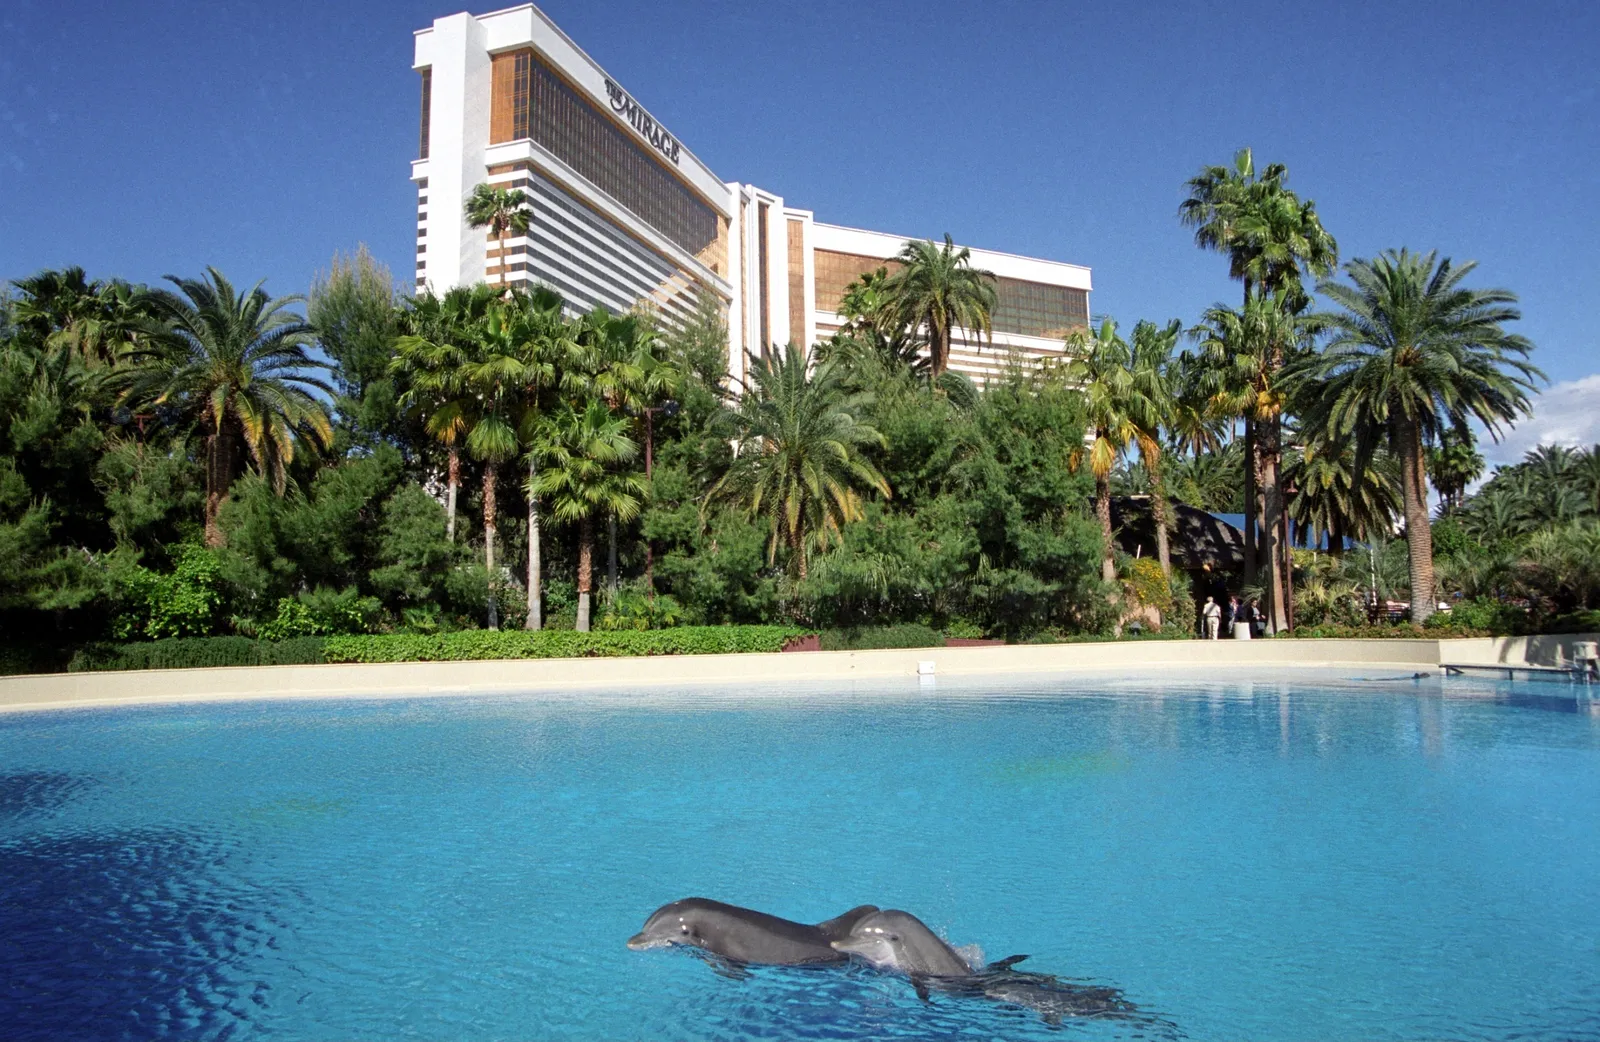 Original dolphin at Mirage on Las Vegas Strip dies at age 48